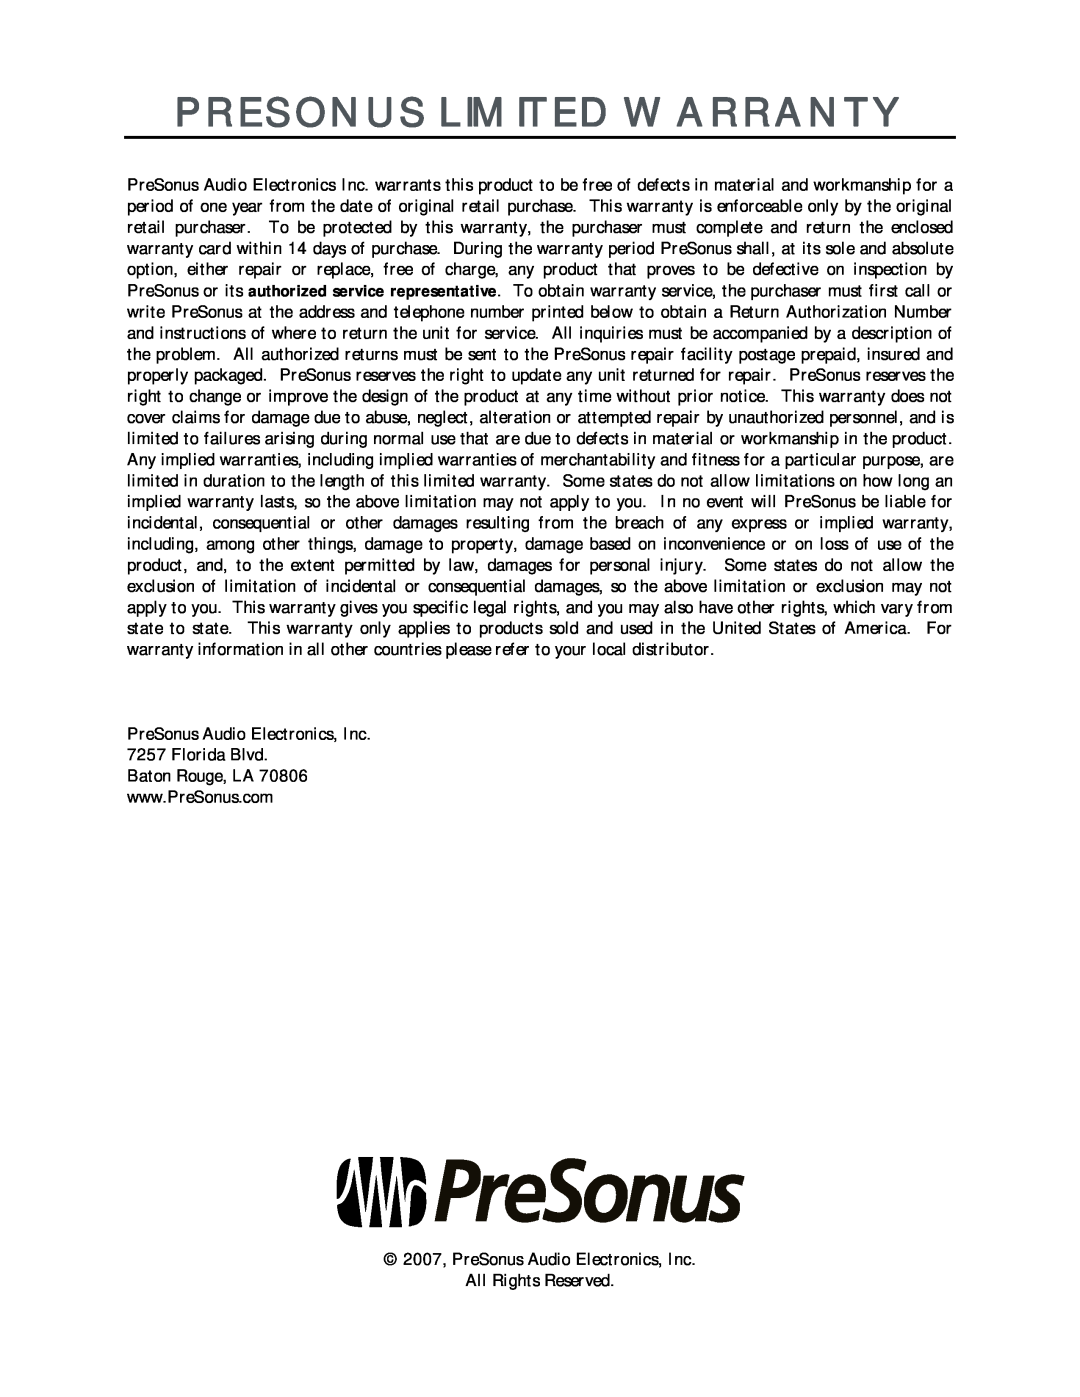 Presonus Audio electronic Version 1.0 user manual Presonus Limited Warranty, 2007, PreSonus Audio Electronics, Inc 